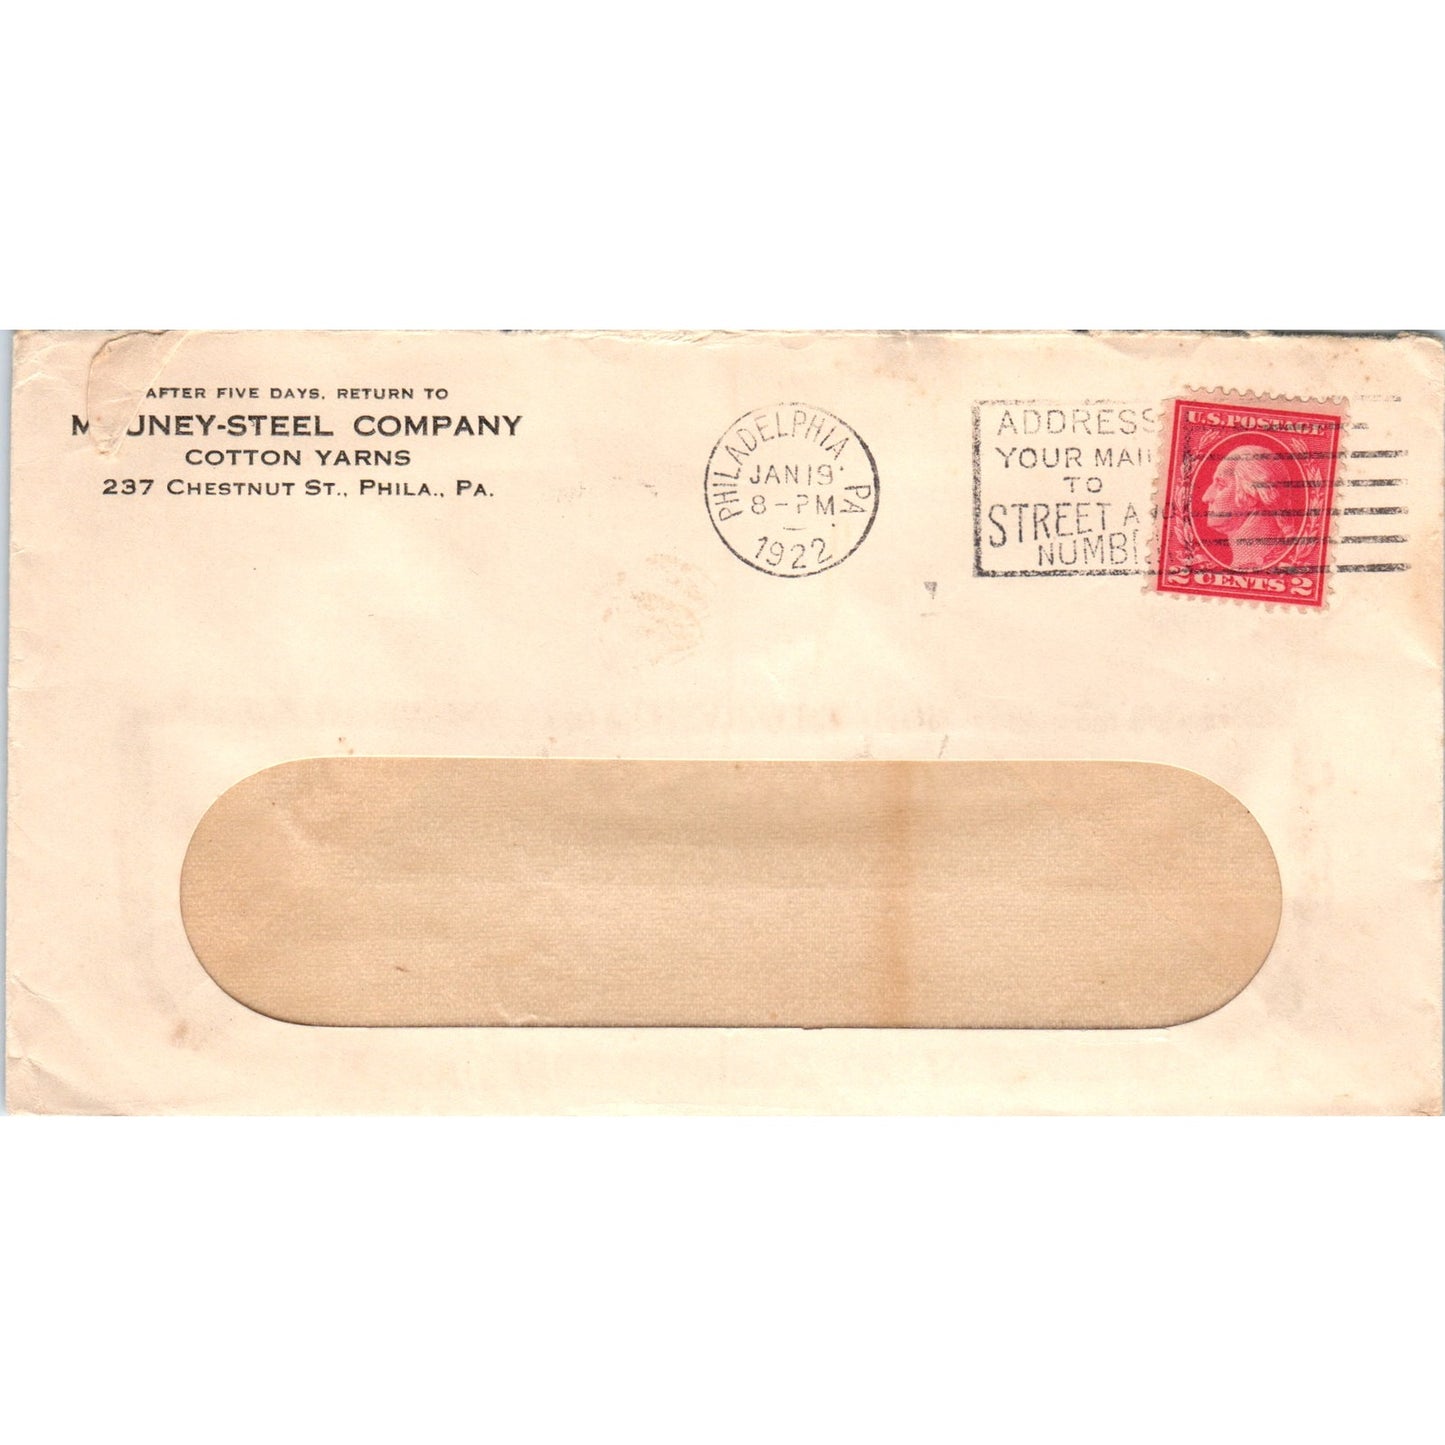 1922 Mauney-Steel Company Cotton Yarn Philadelphia Postal Cover Envelope TG7-PC1